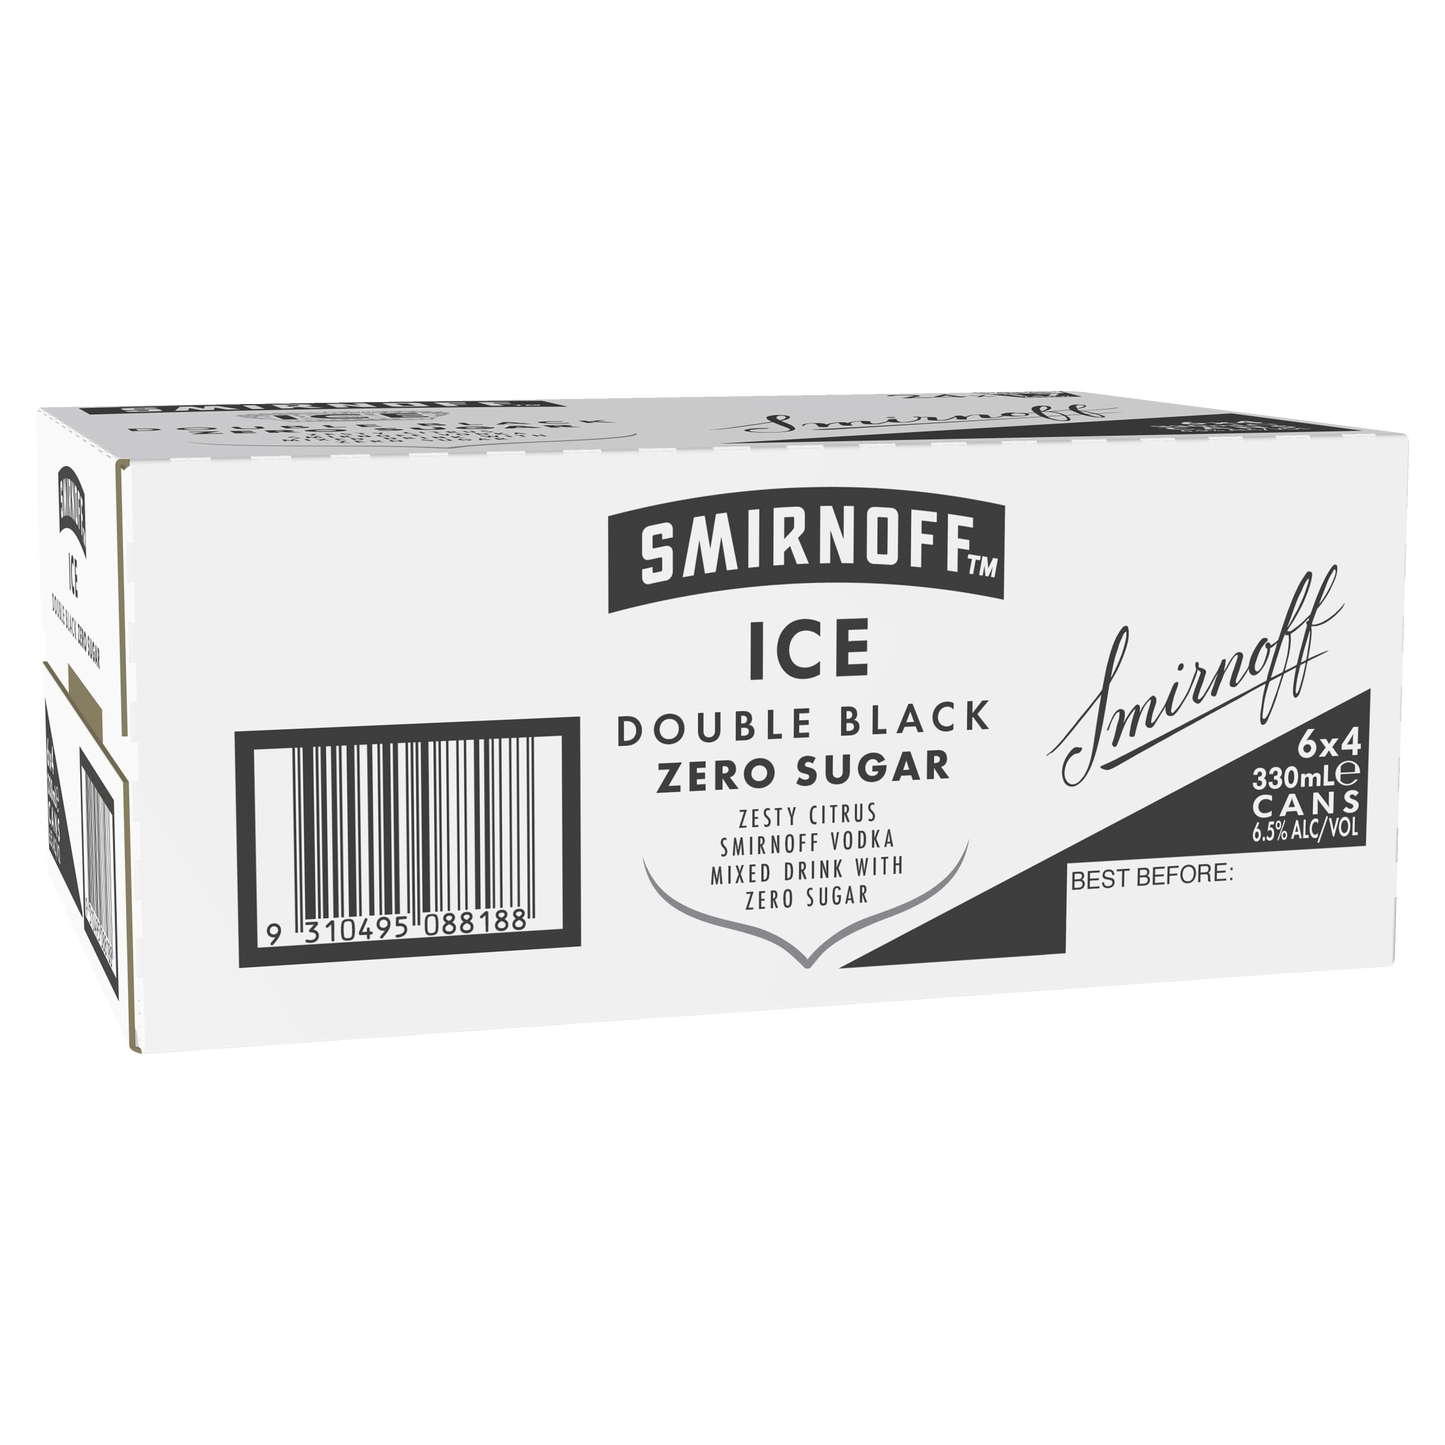 Smirnoff Ice Double Black Zero Sugar 6.5% Cans 330ml